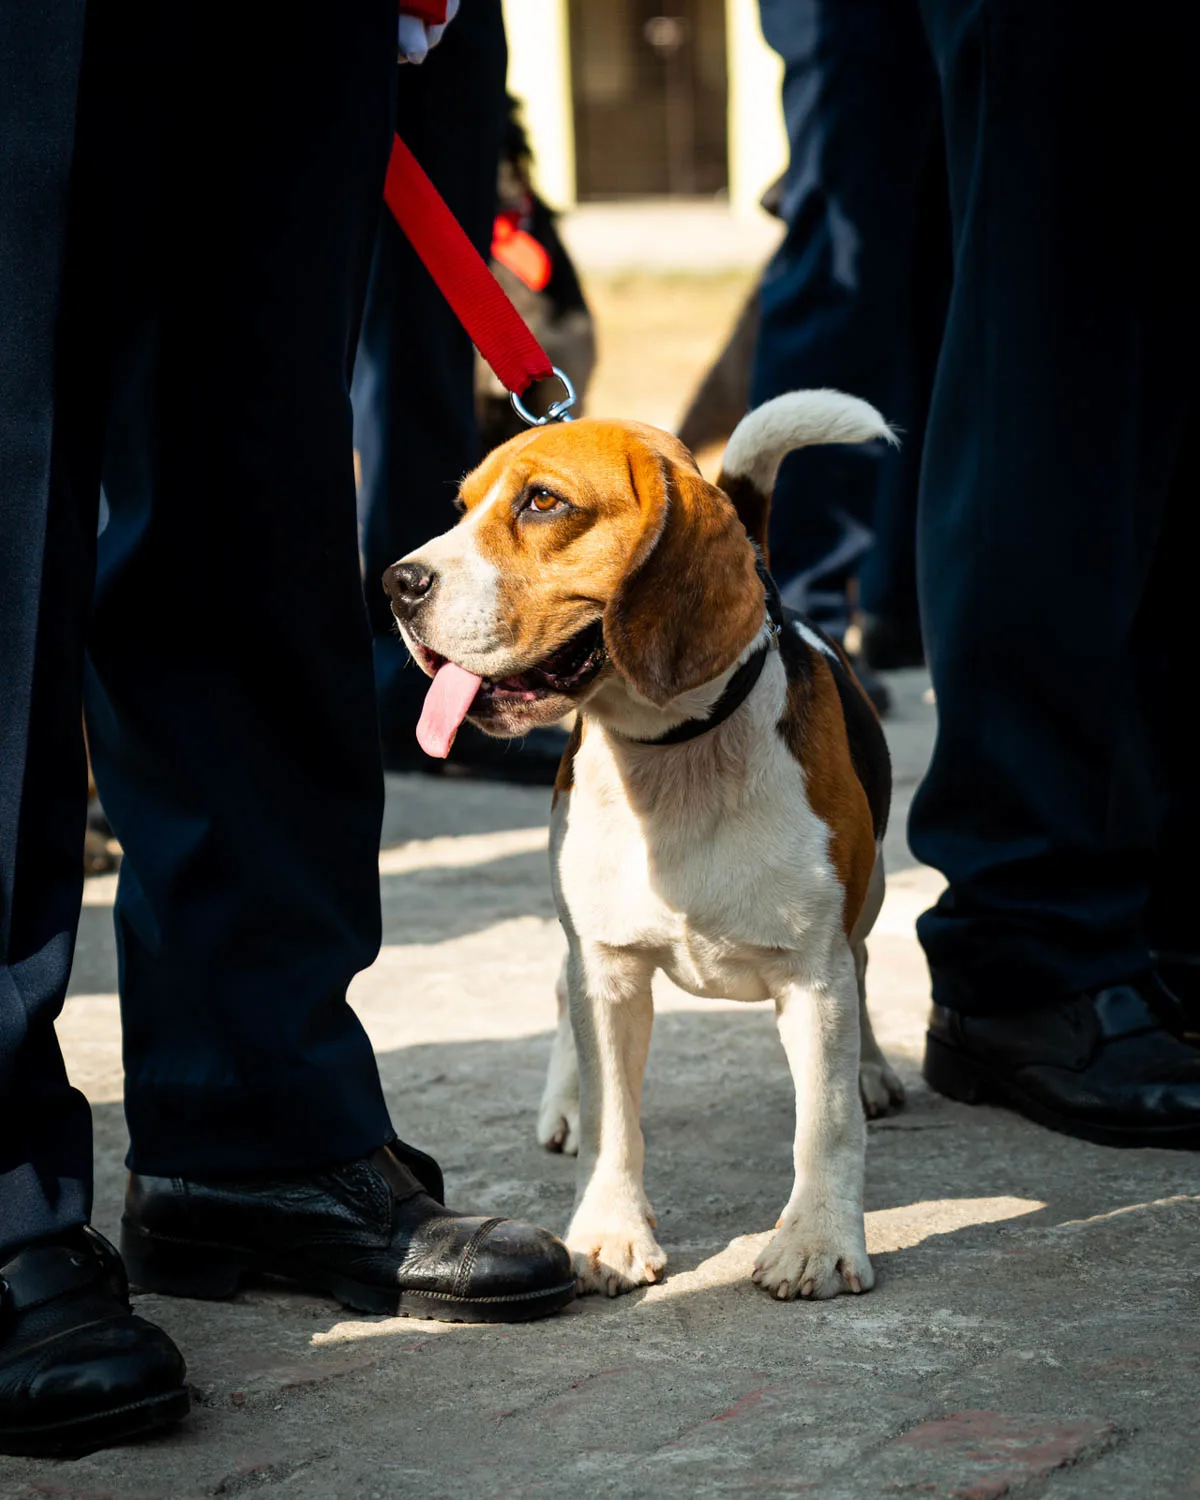 Police beagle on a leash.